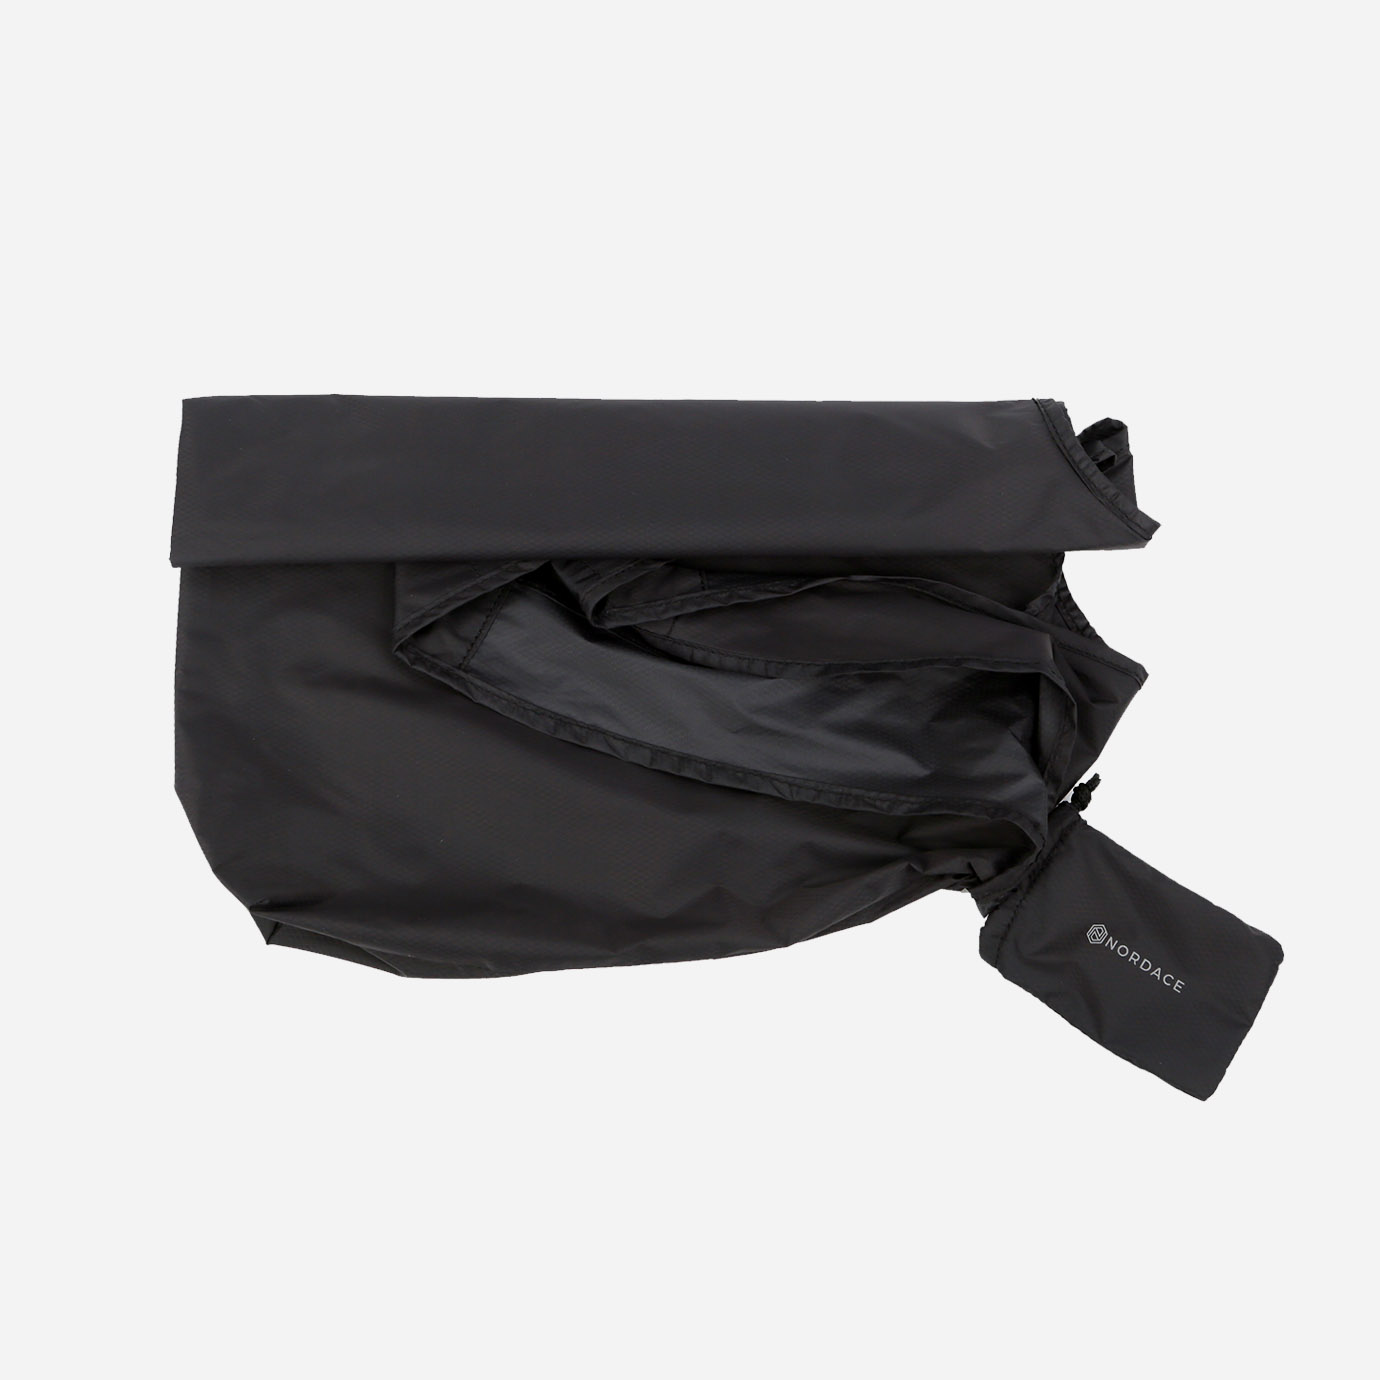 Nordace Reusable Shopping Bag - Foldable